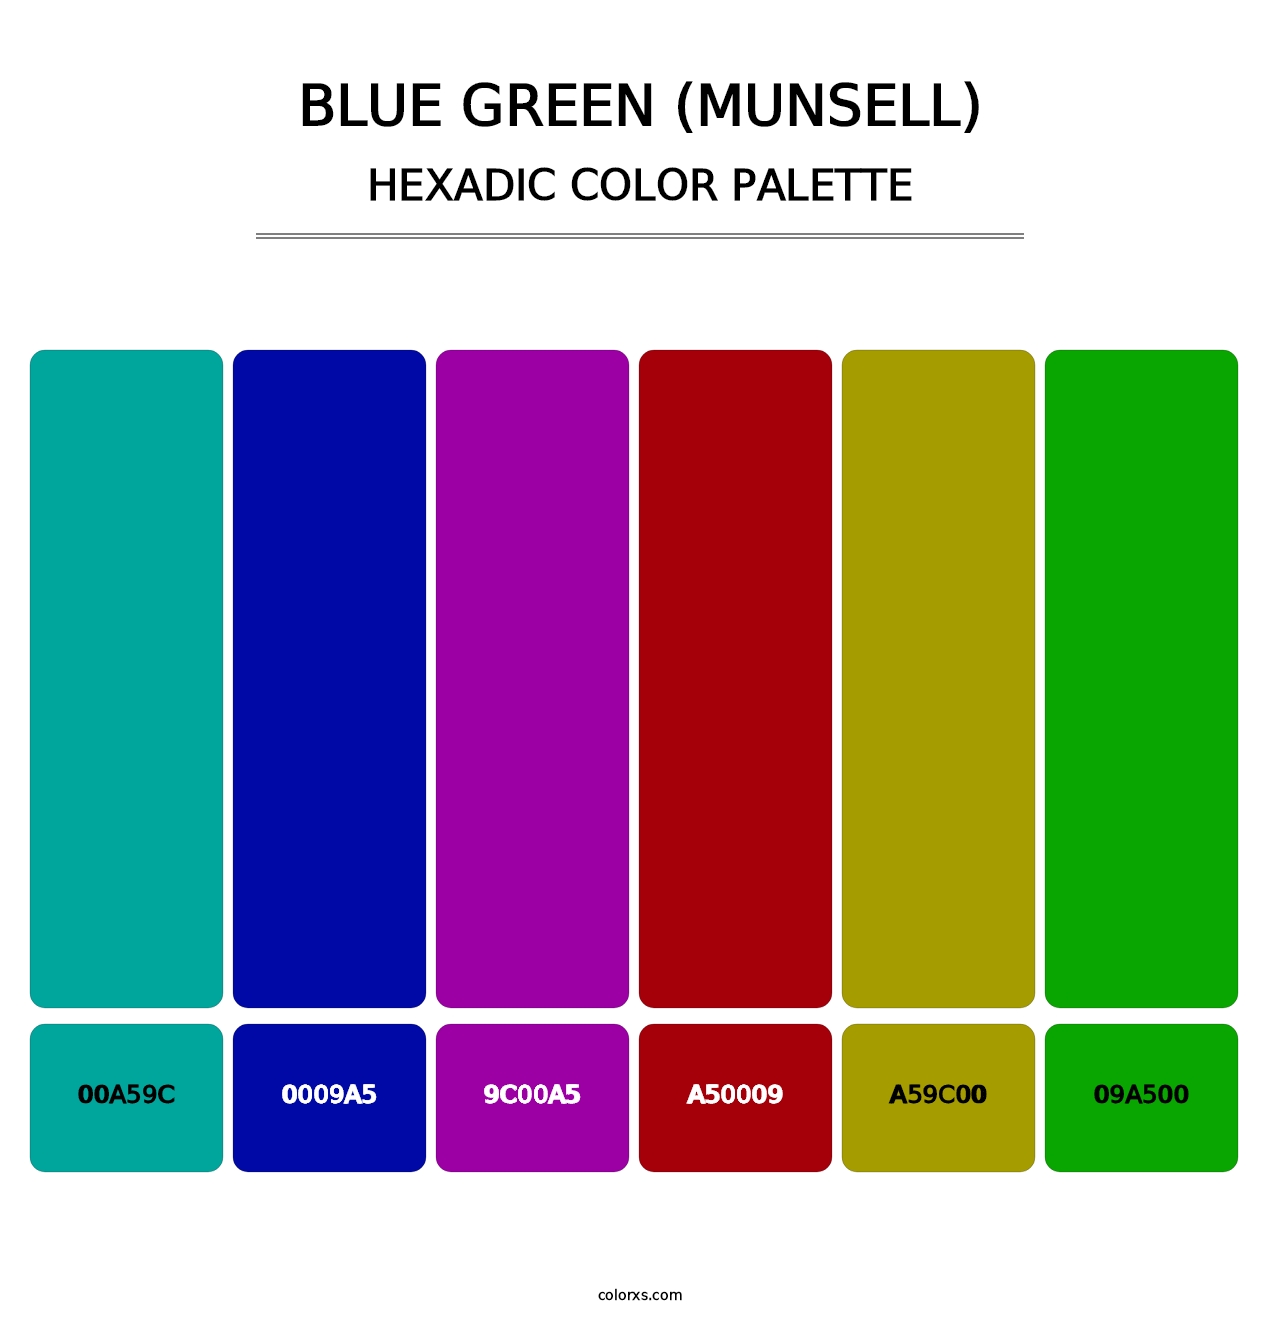 Blue Green (Munsell) - Hexadic Color Palette